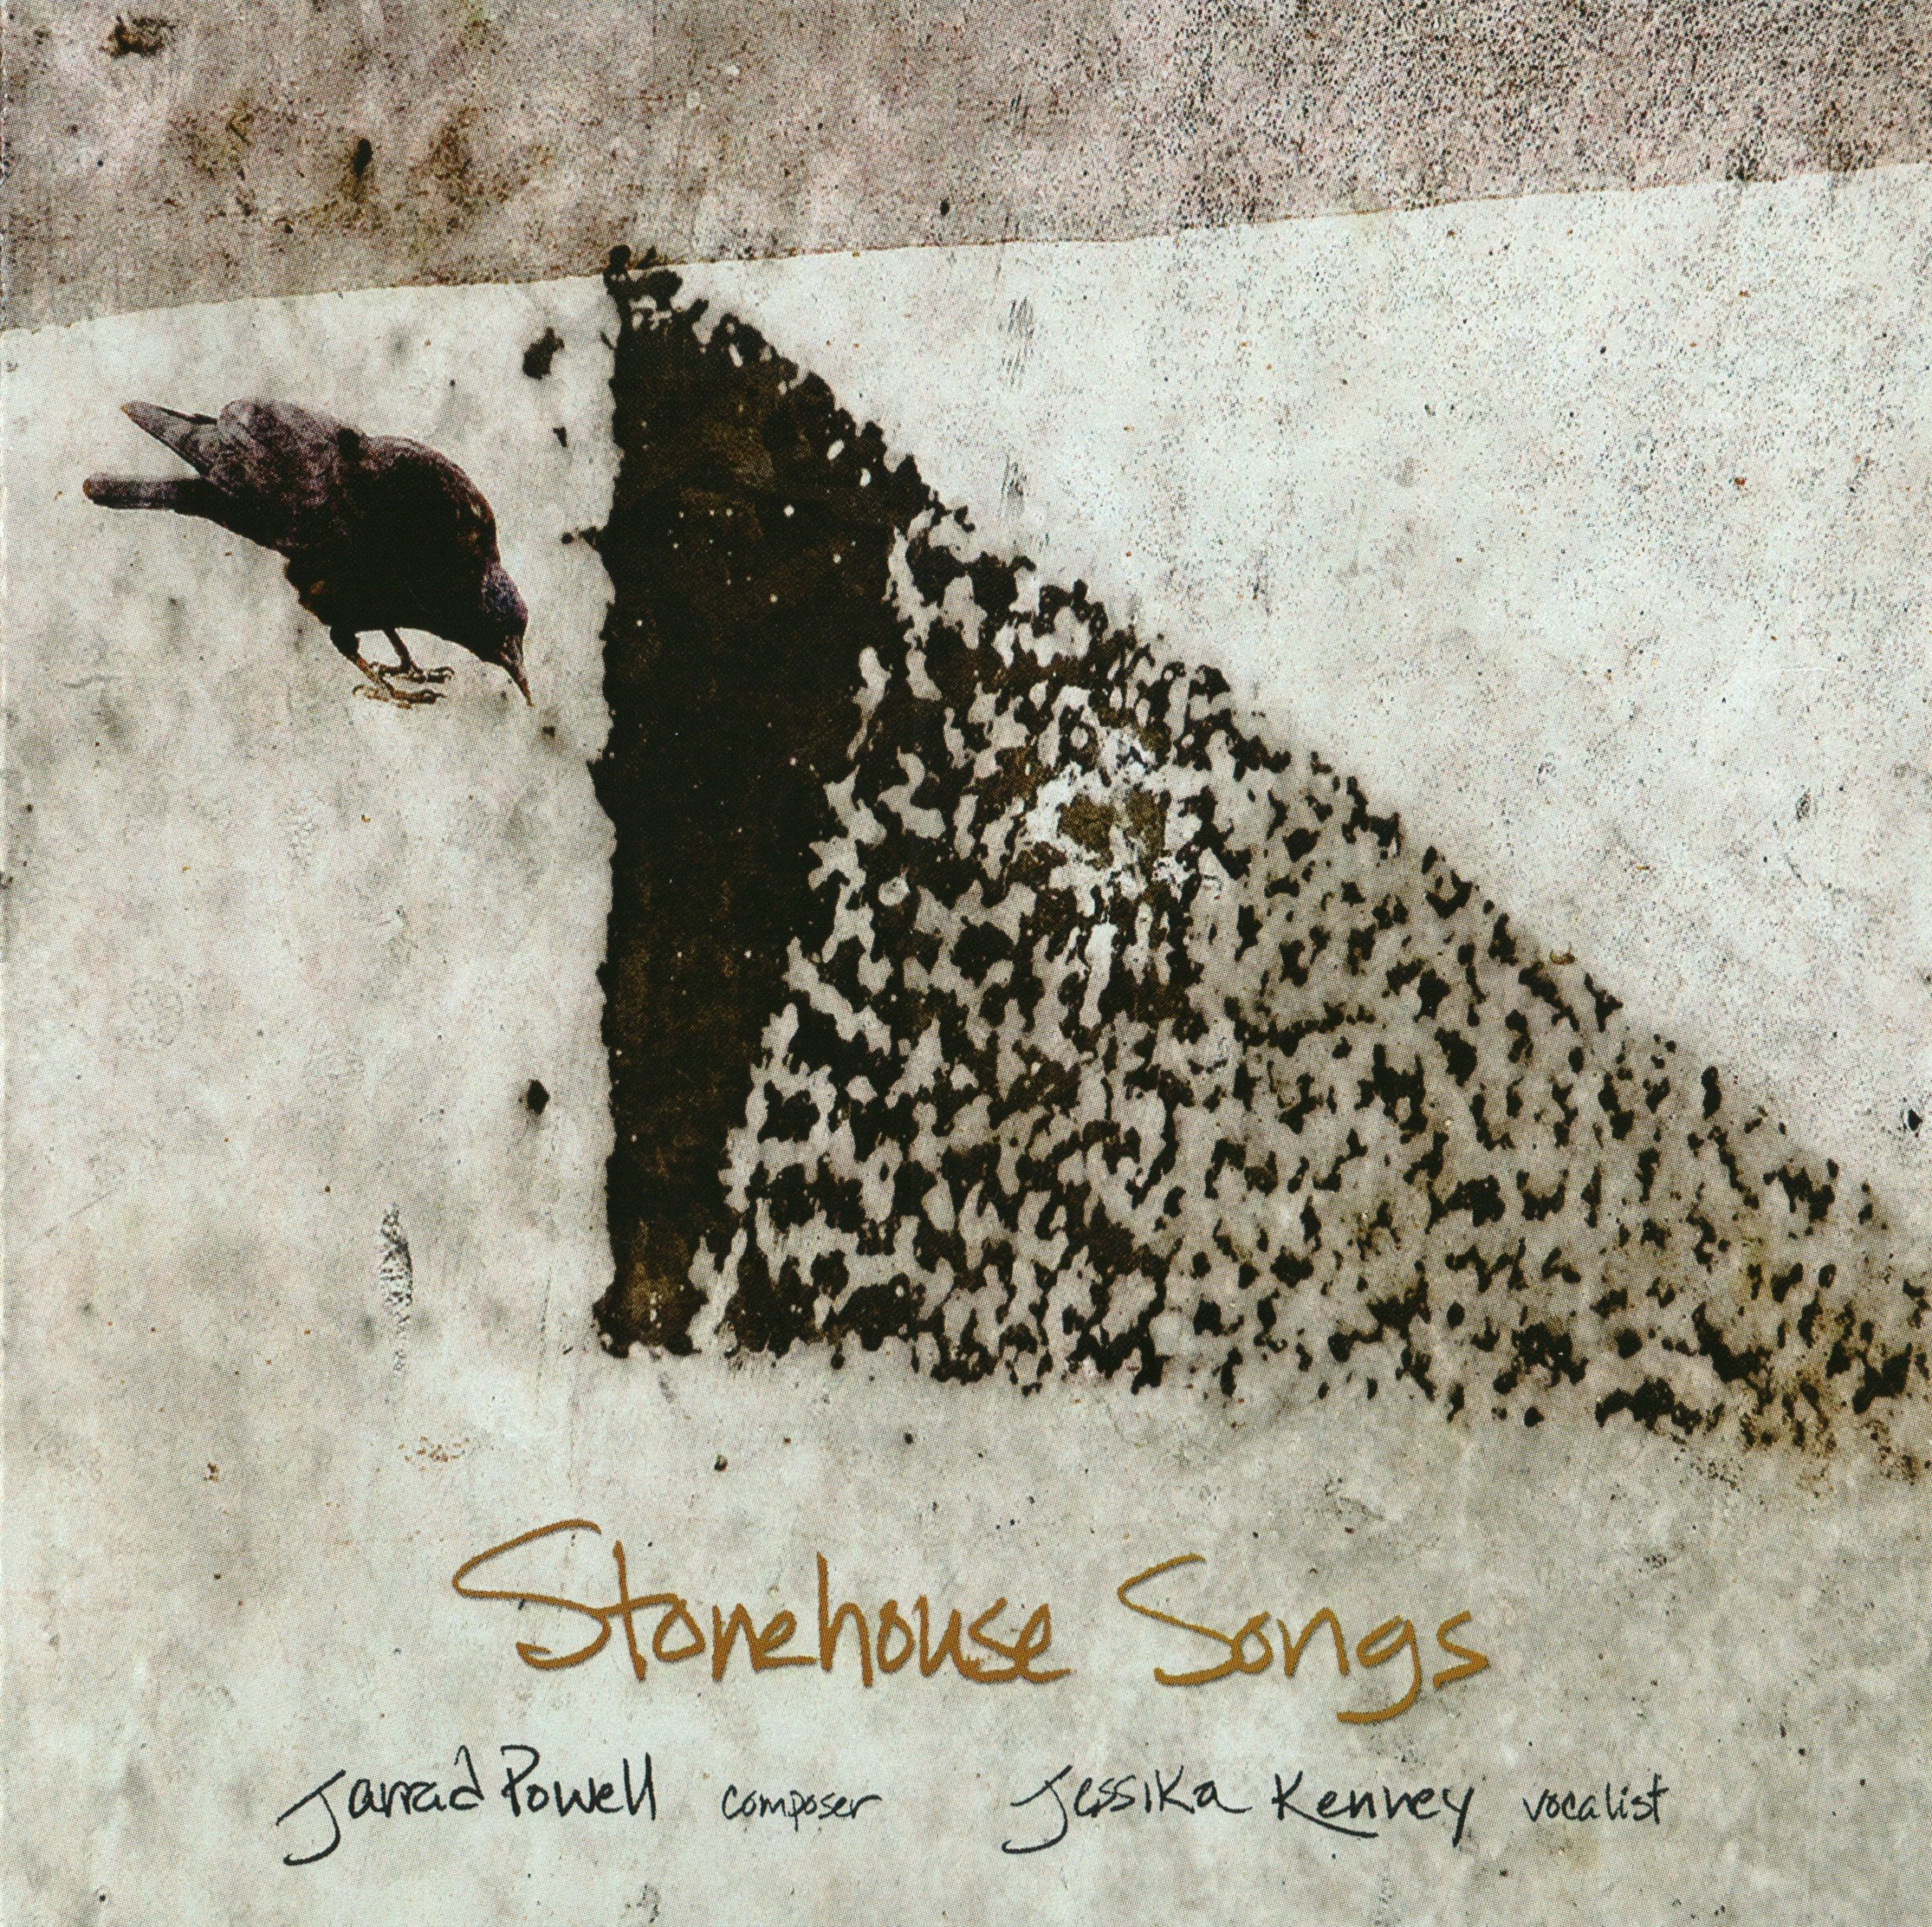 Jarrad Powell Stonehouse Songs